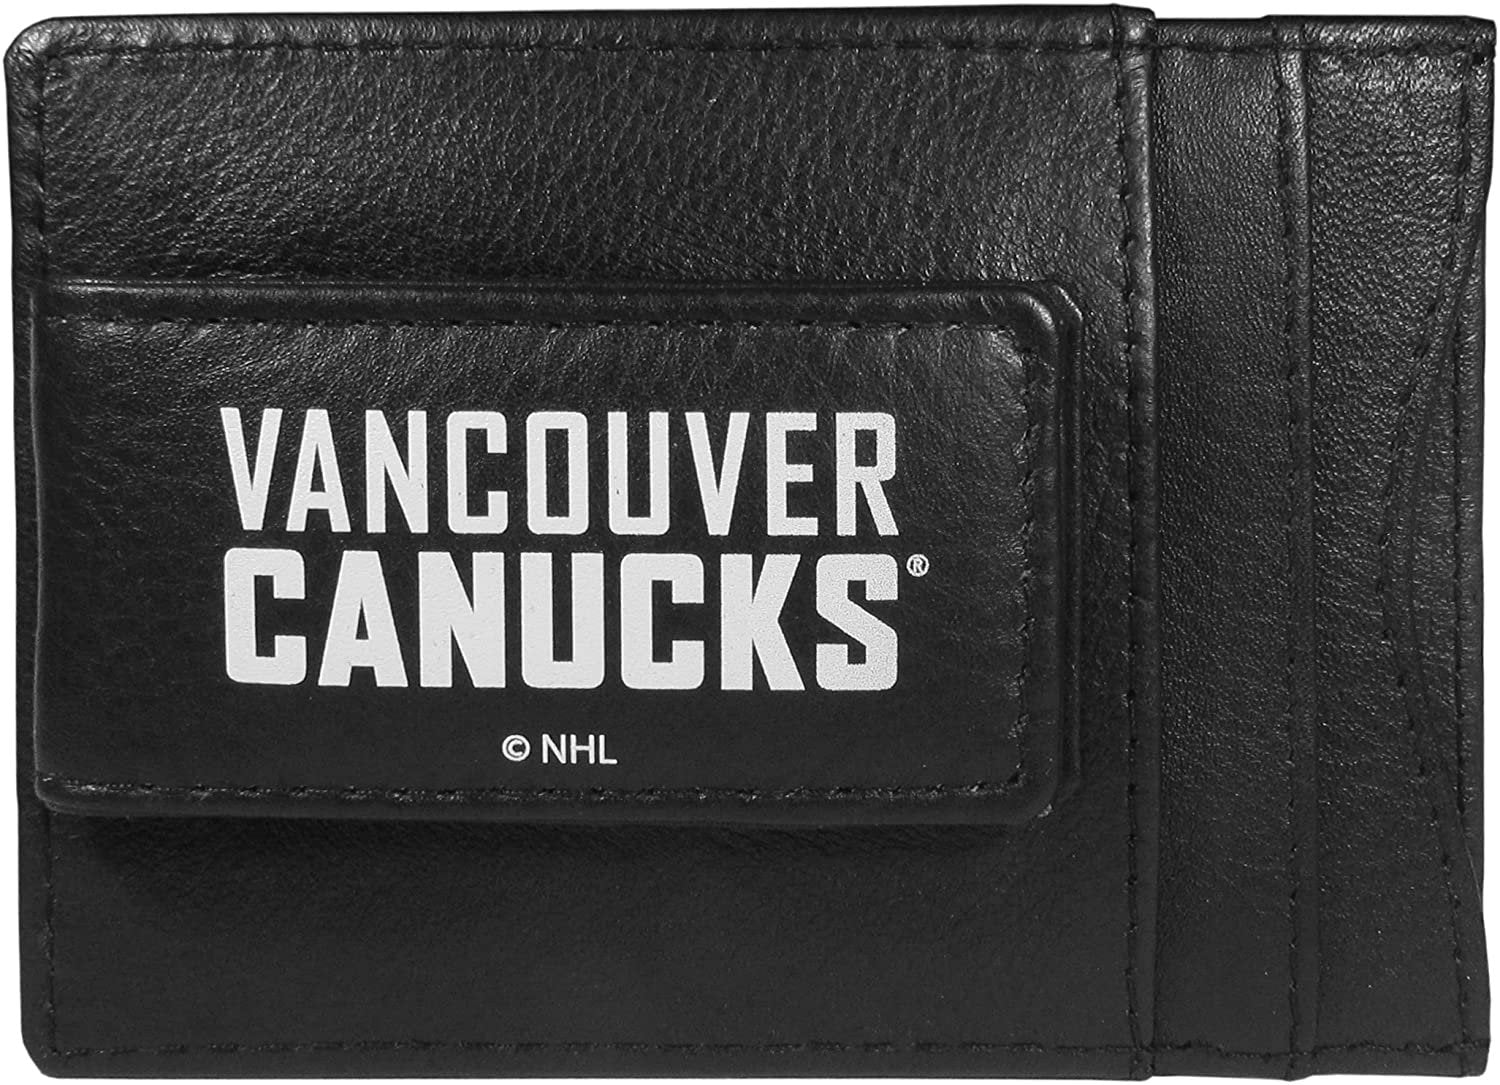 Vancouver Canucks Black Leather Wallet, Front Pocket Magnetic Money Clip, Printed Logo